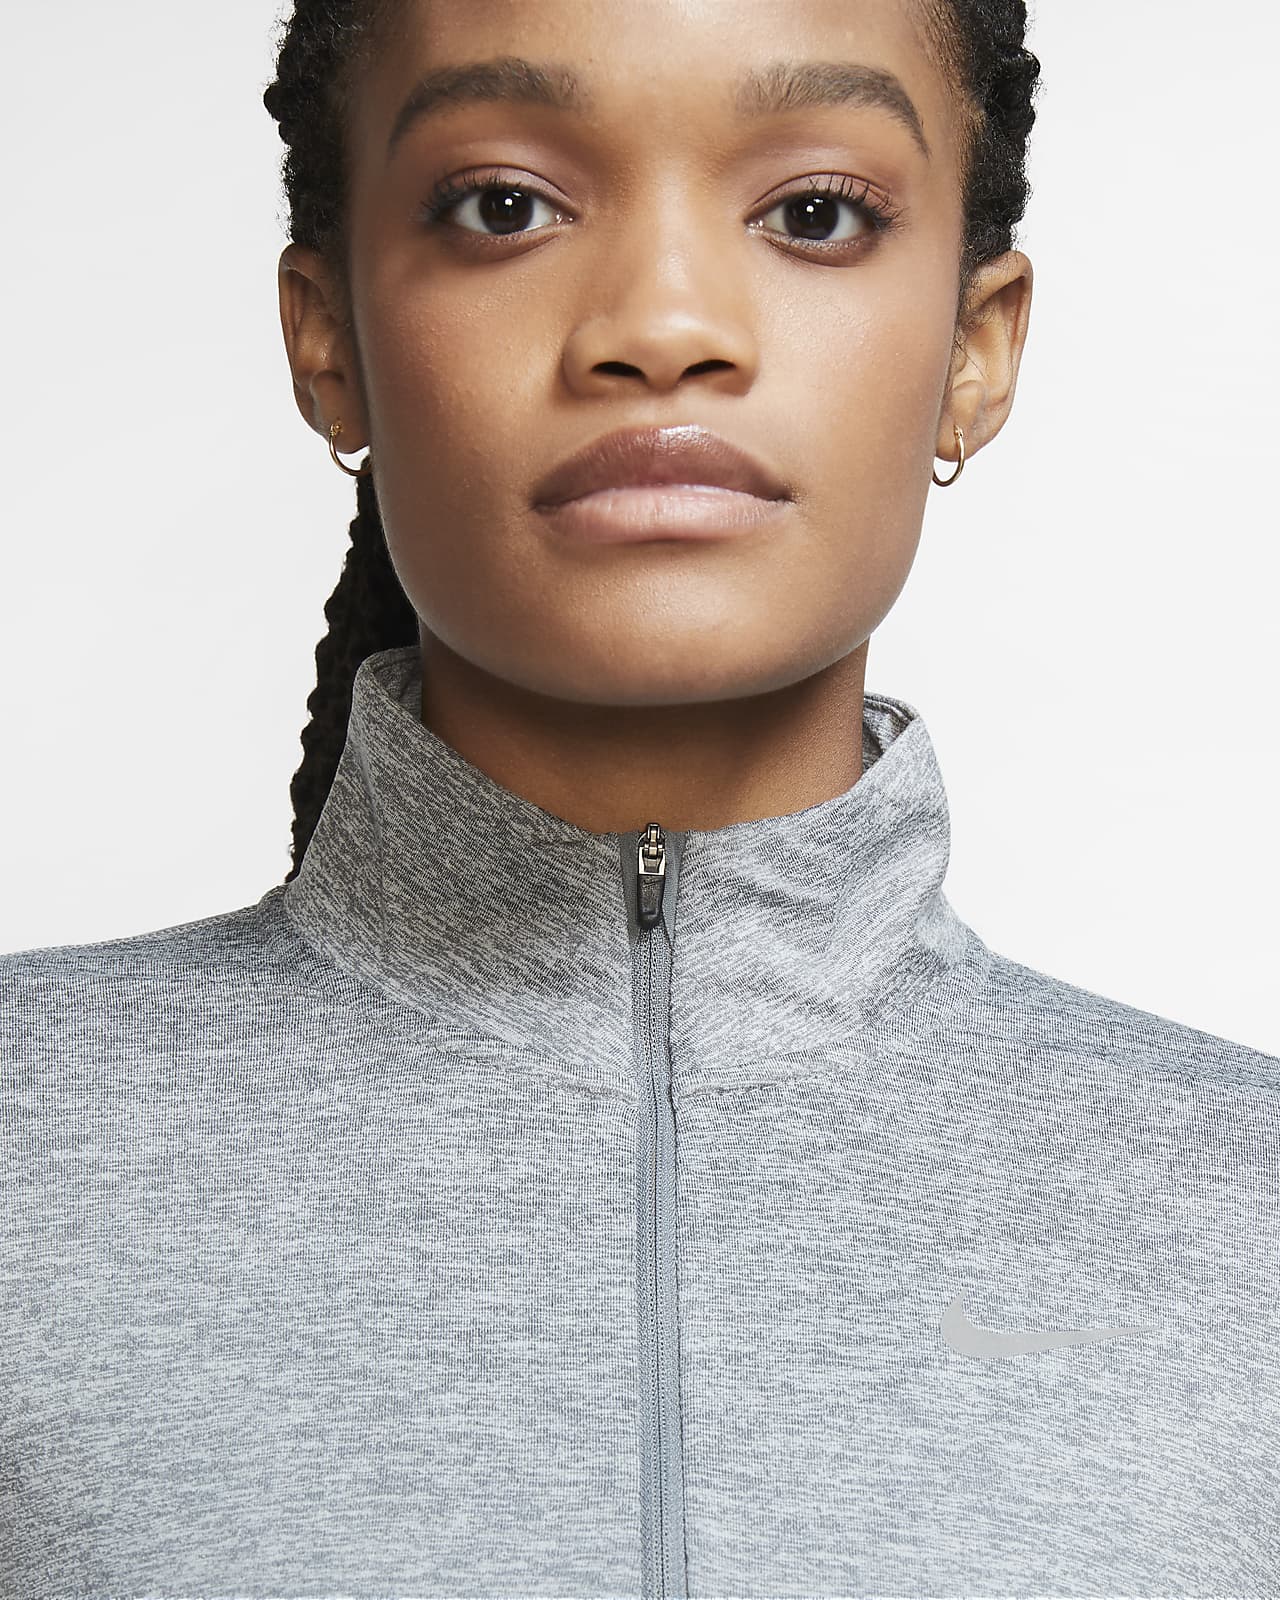  Nike Women's Dri-FIT Element Running 1/2 Zip Mid Layer Top  Shirt (as1, Alpha, s, Regular, Regular, Orange Trance/Light Orange Chalk,  Small) : Clothing, Shoes & Jewelry